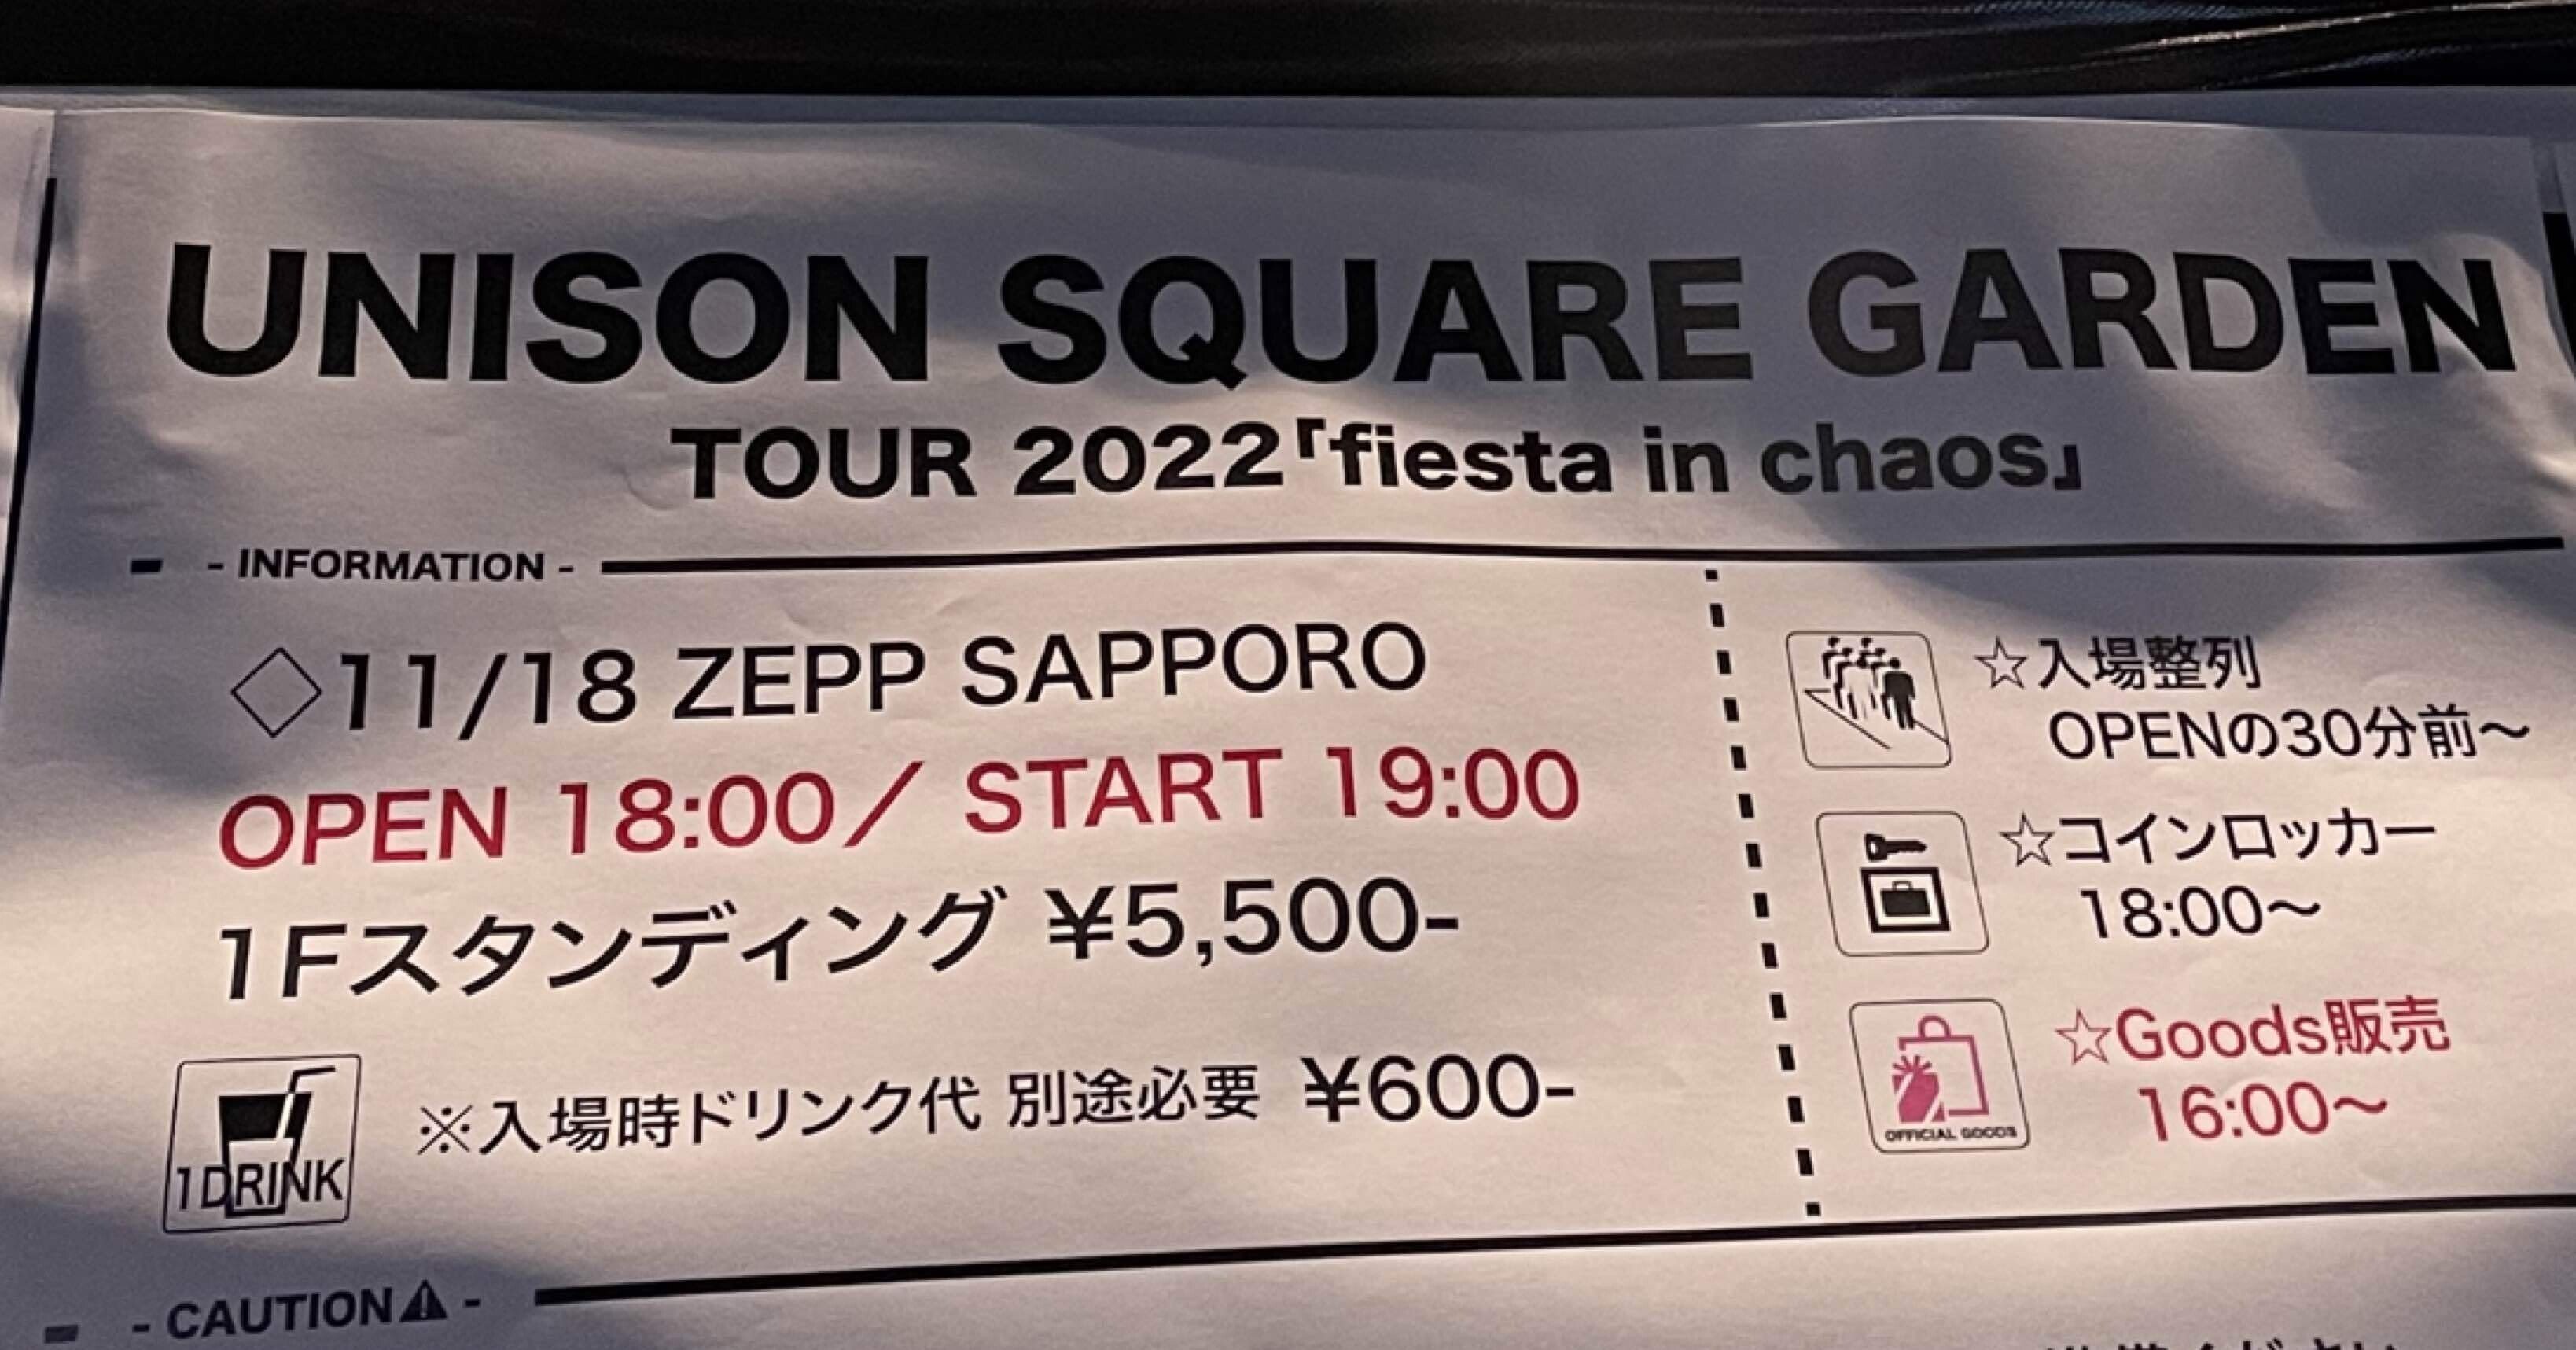 UNISON SQUARE GARDEN 3/2 大阪 チケット32会場